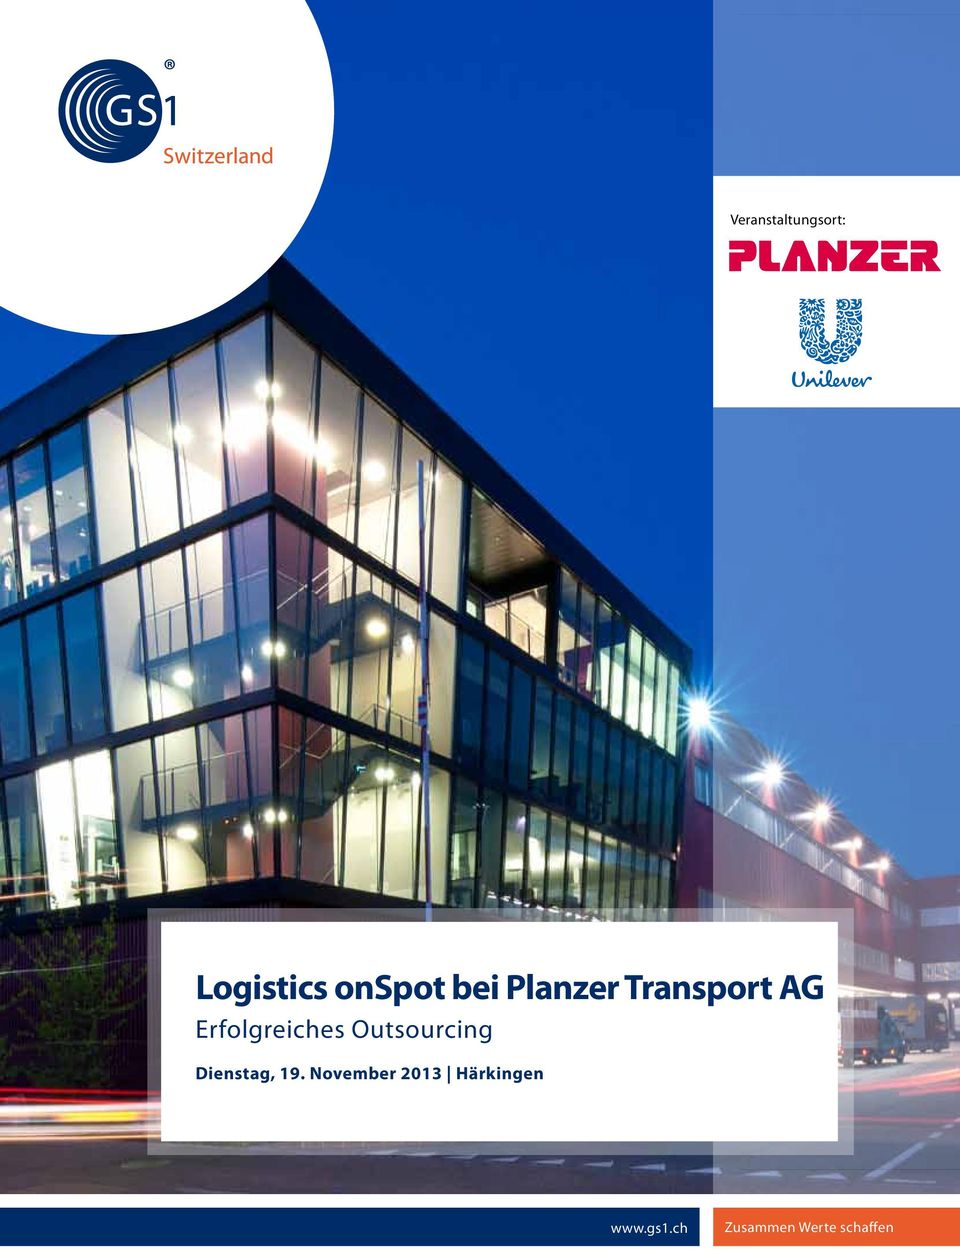 Planzer Transport AG